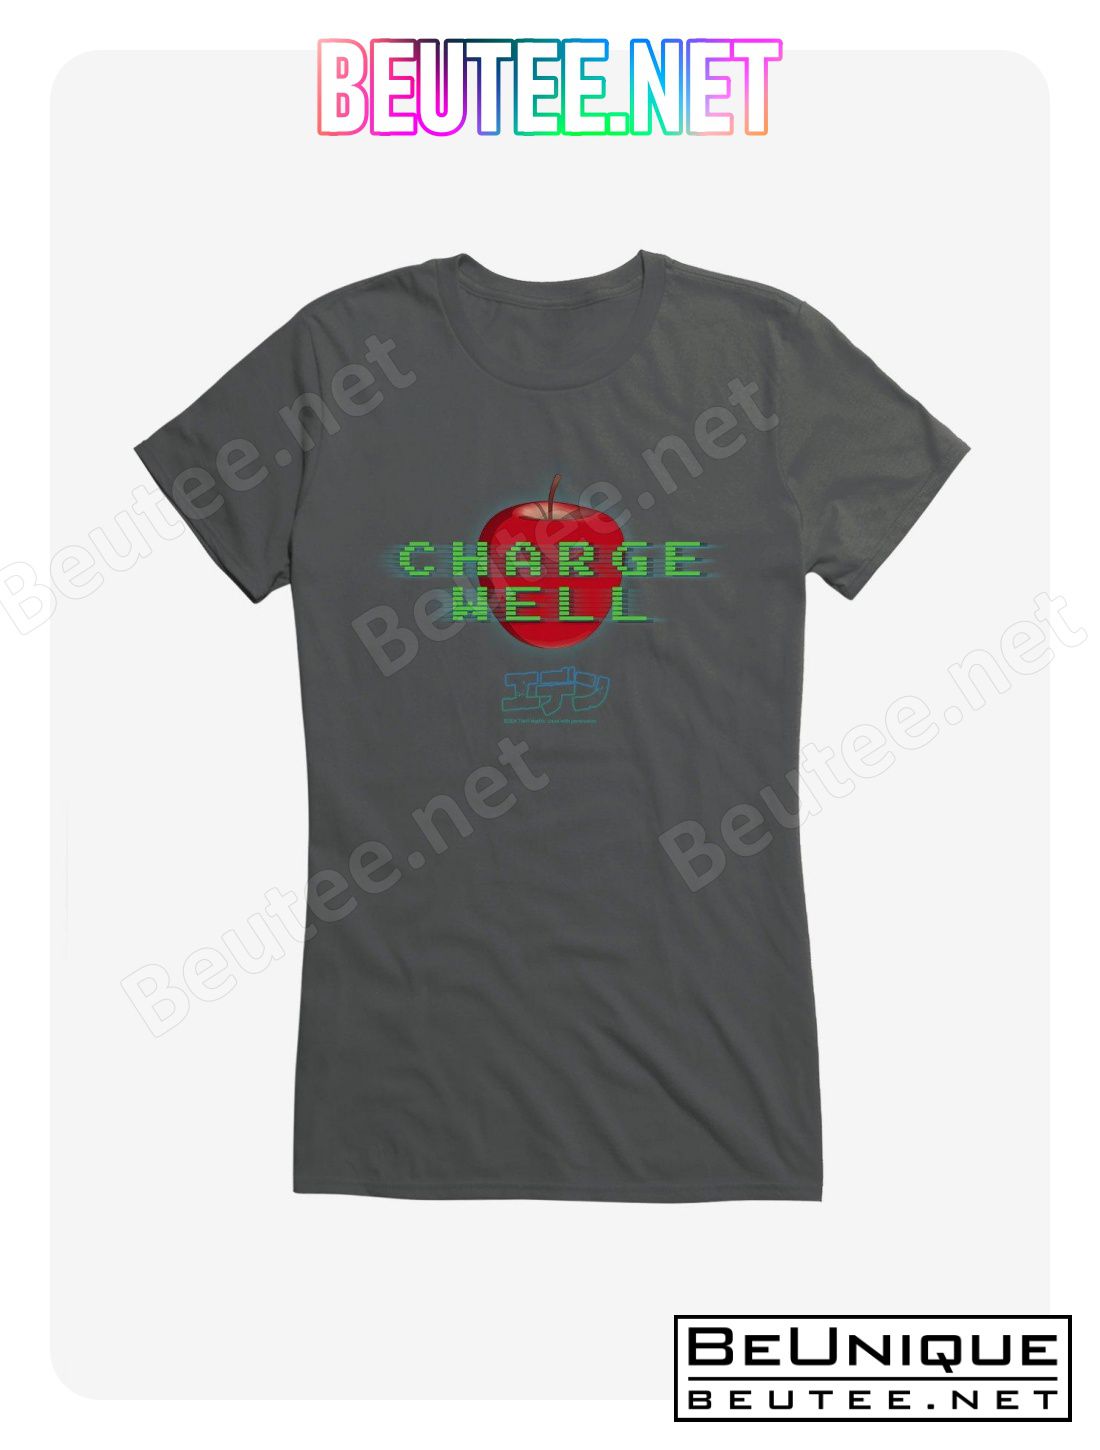 Eden Charge Well Apple Logo T-Shirt